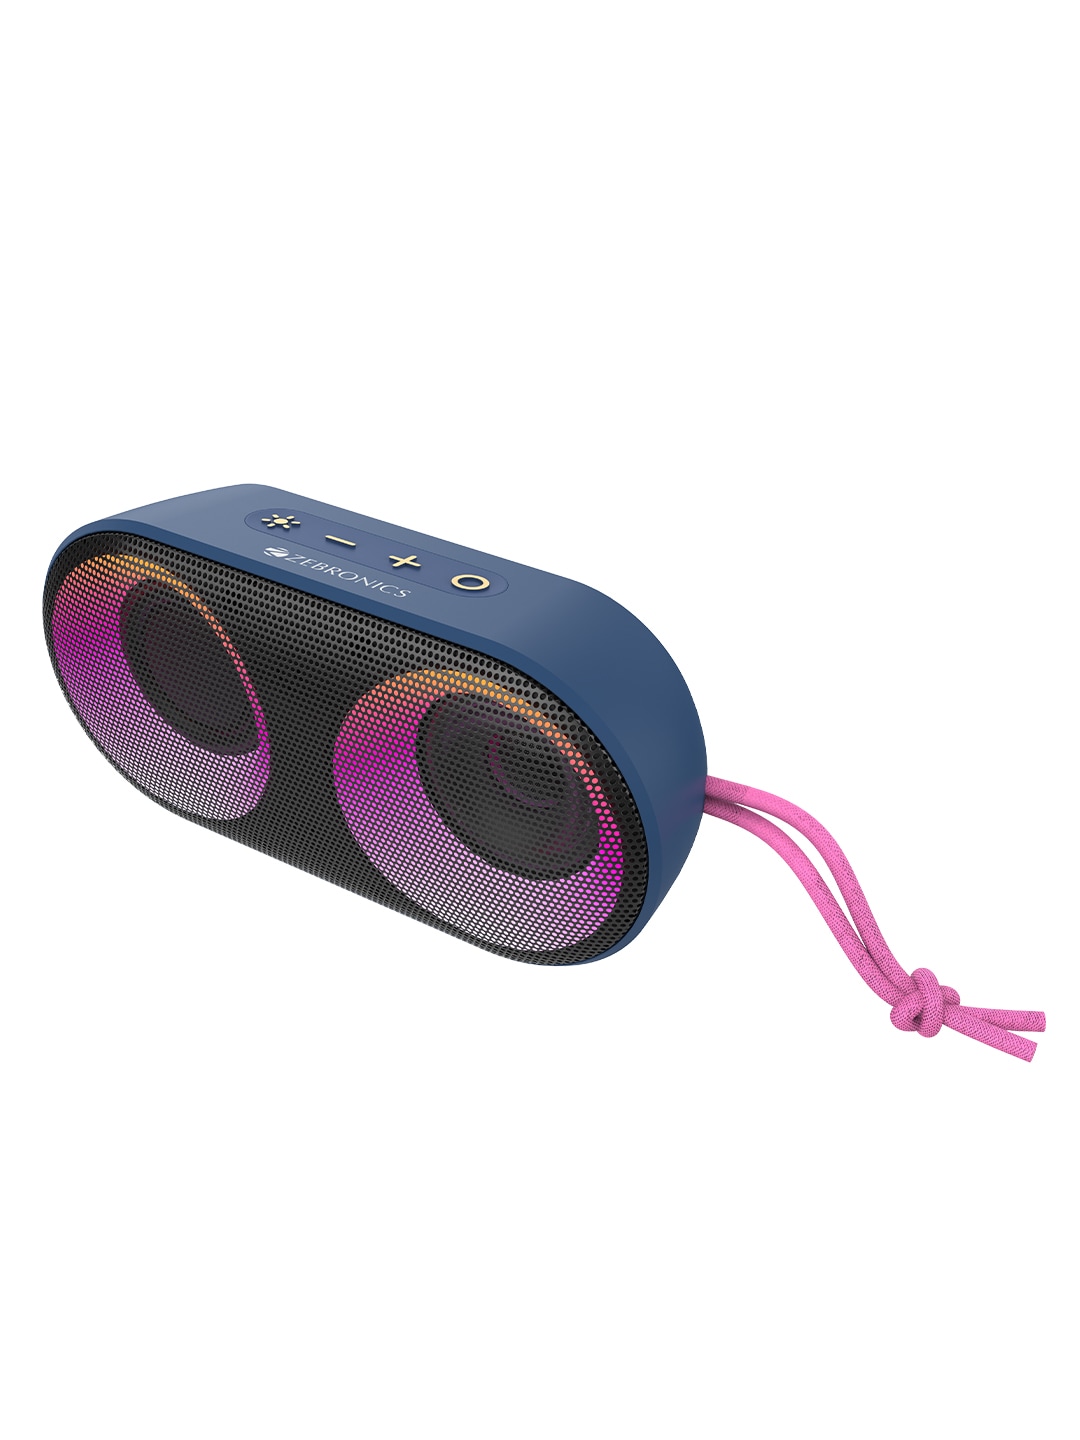 ZEBRONICS ZEB-MUSIC BOMB X MINI Bluetooth 5.0 speaker with IPX5 Waterproof - Blue Price in India